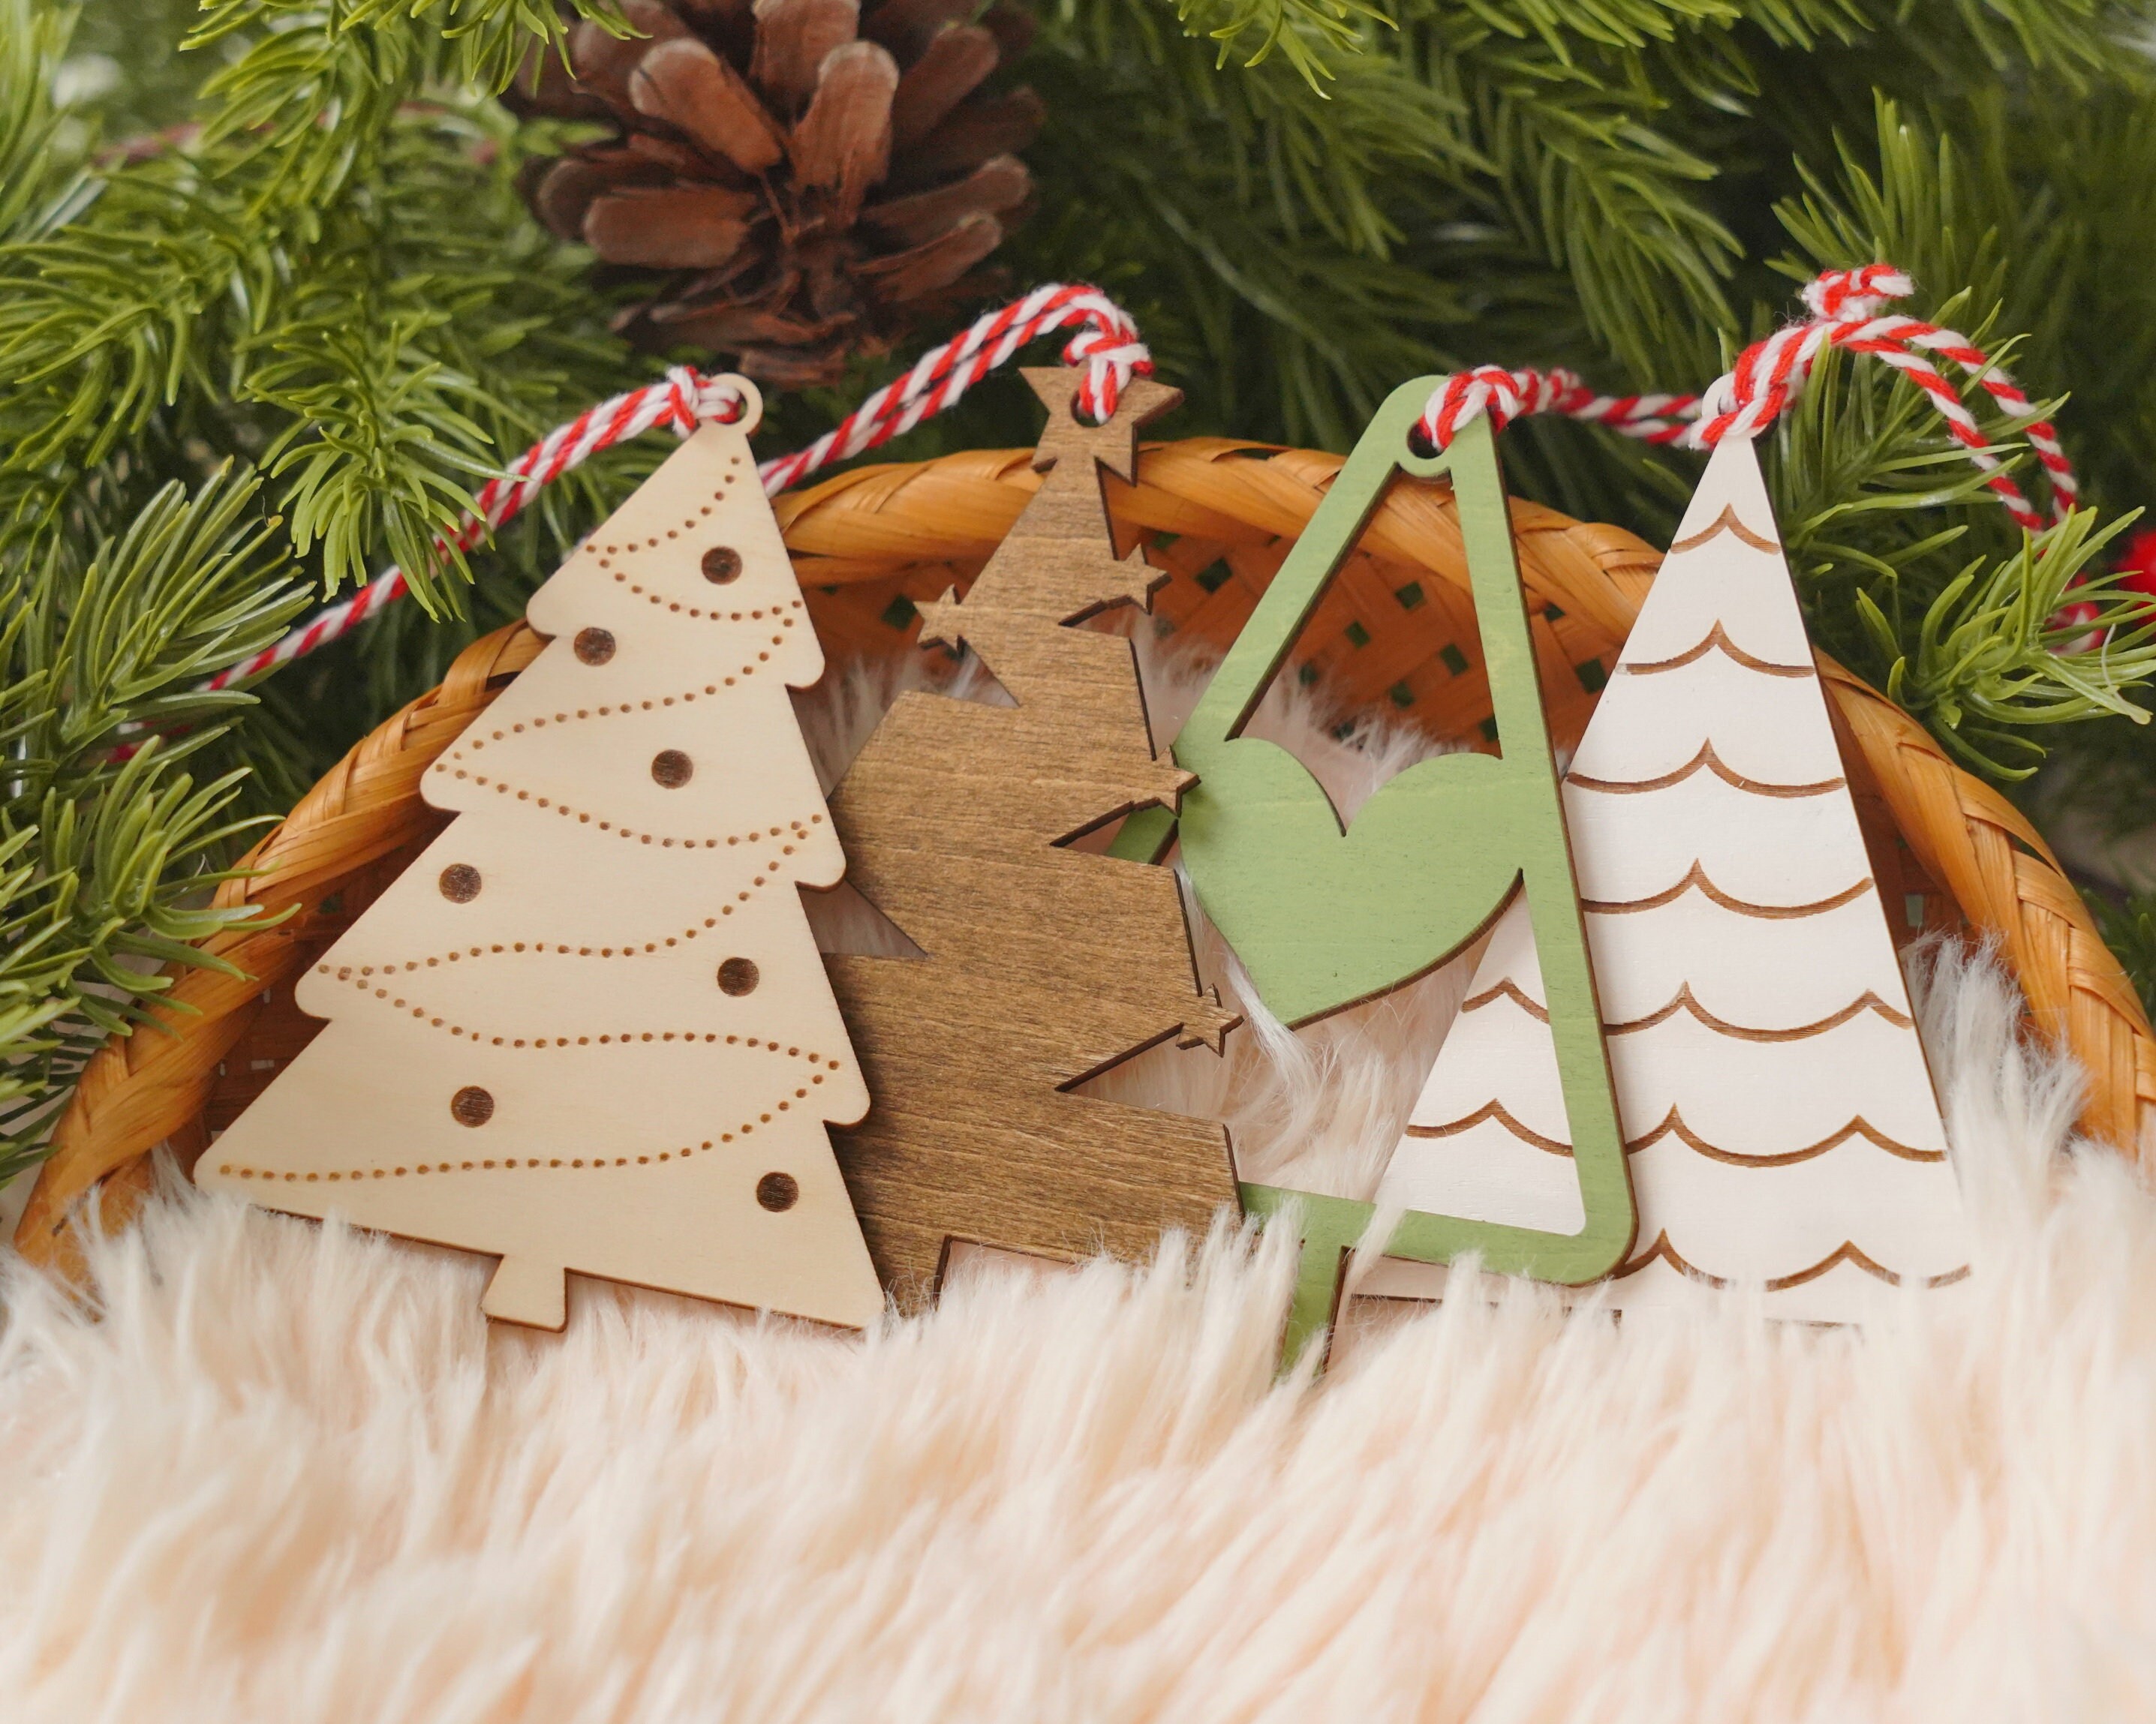  27 Pieces Vintage Christmas Hanging Wooden Ornament Kids Santa  Snowman Deer Shaped Embellishments Assorted Christmas Tree Decorations  Decorative Hanging Ornaments for Xmas Decor (Vintage) : Home & Kitchen